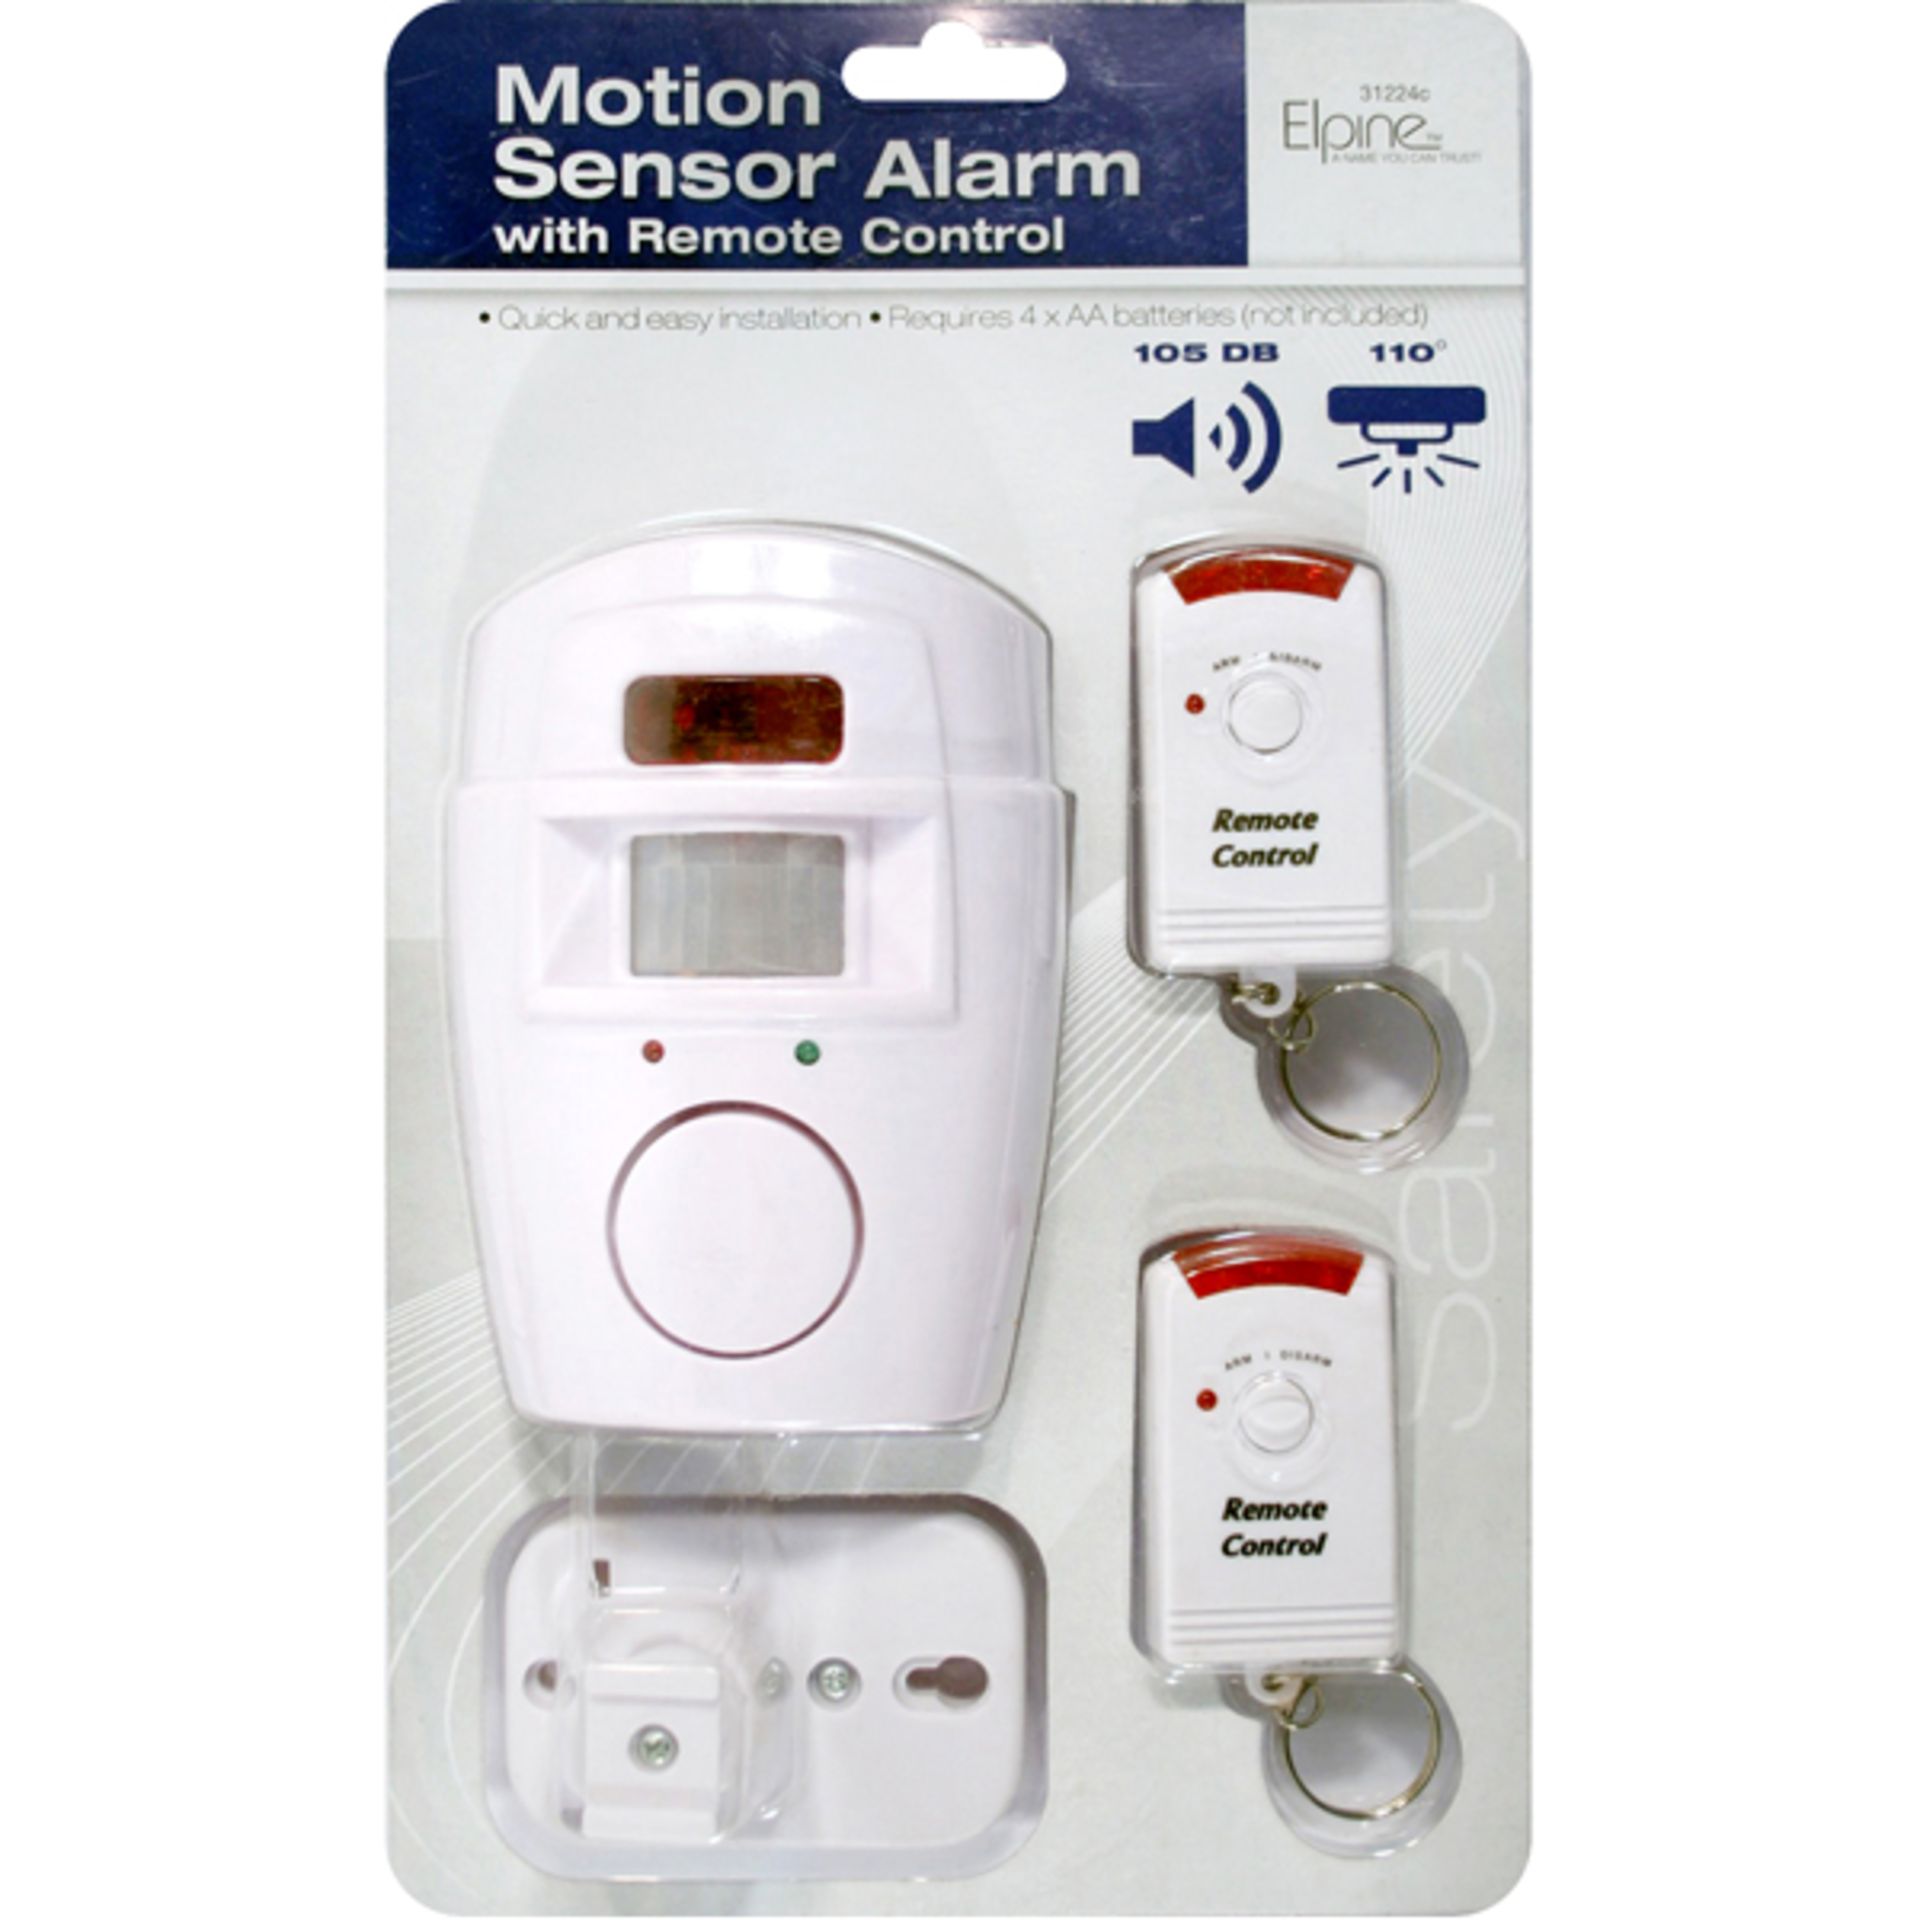 V Brand New Motion Sensor Alarm With 2 Remote Controls And 105Db Alarm X 3 Bid price to be